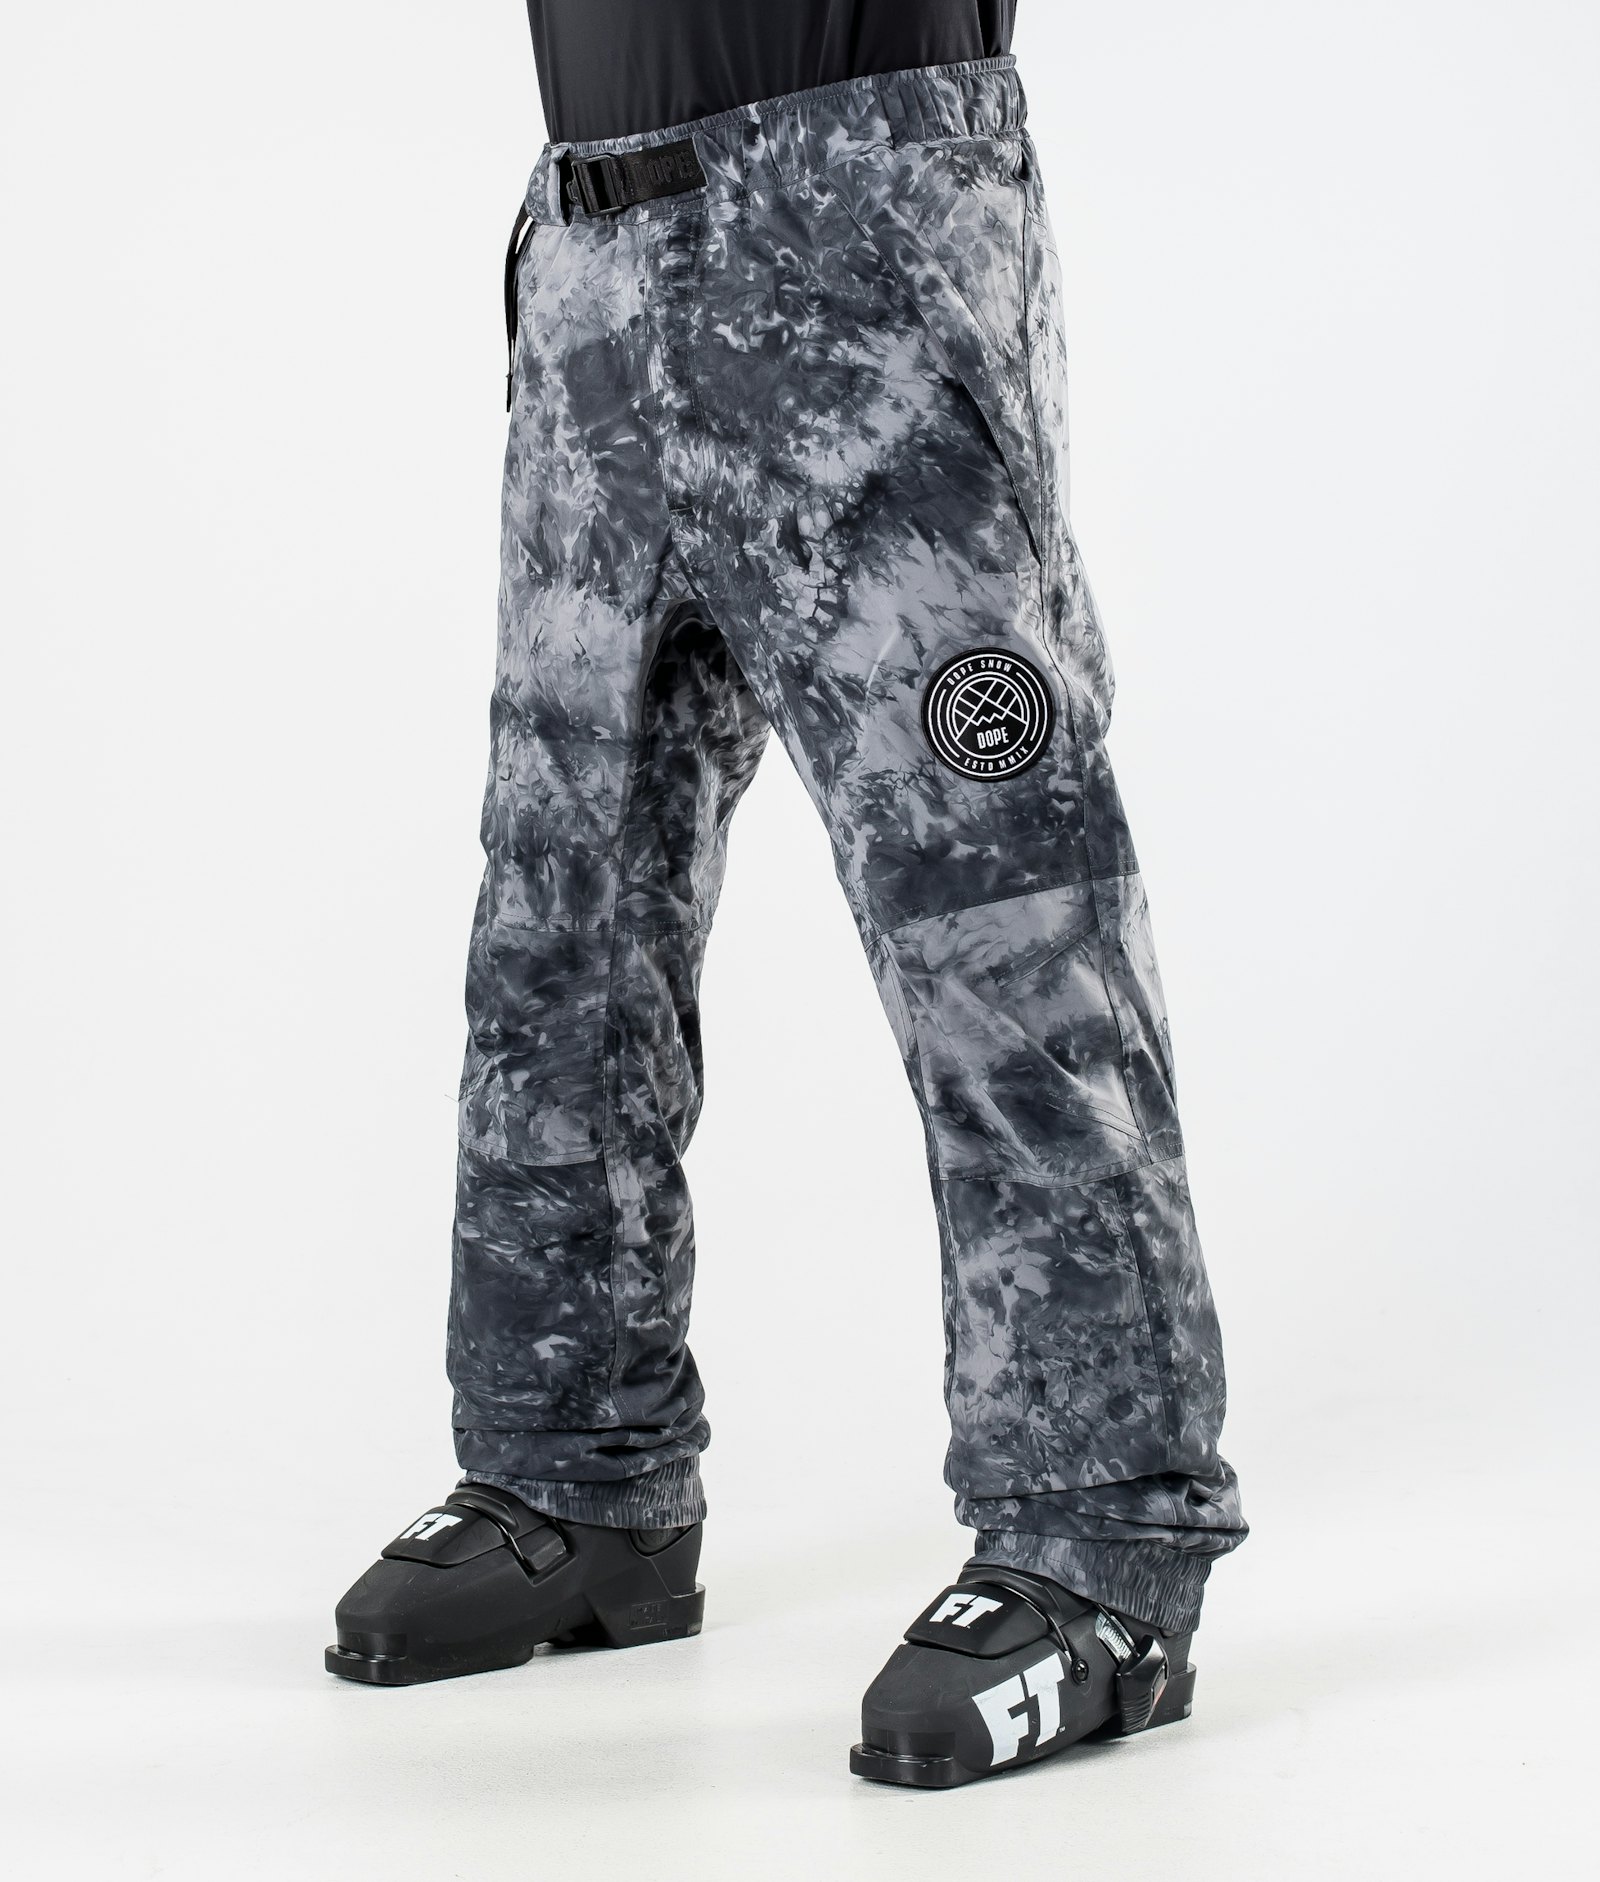 Blizzard 2020 Pantaloni Sci Uomo Limited Edition Tiedye